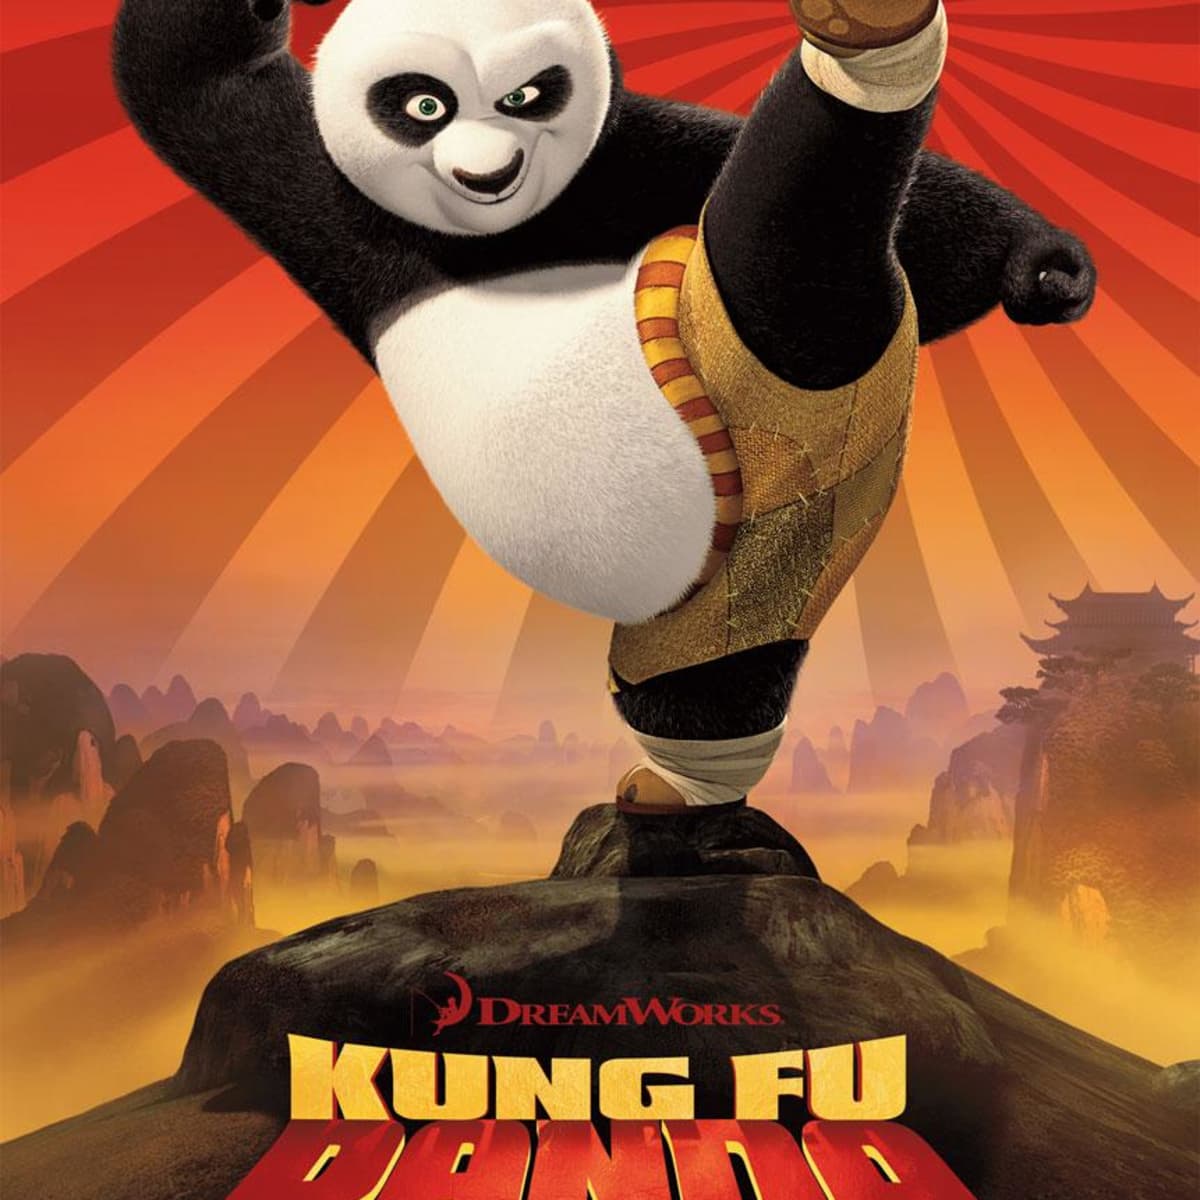 wherte to watch kung fu panda 3 free opnline good quality